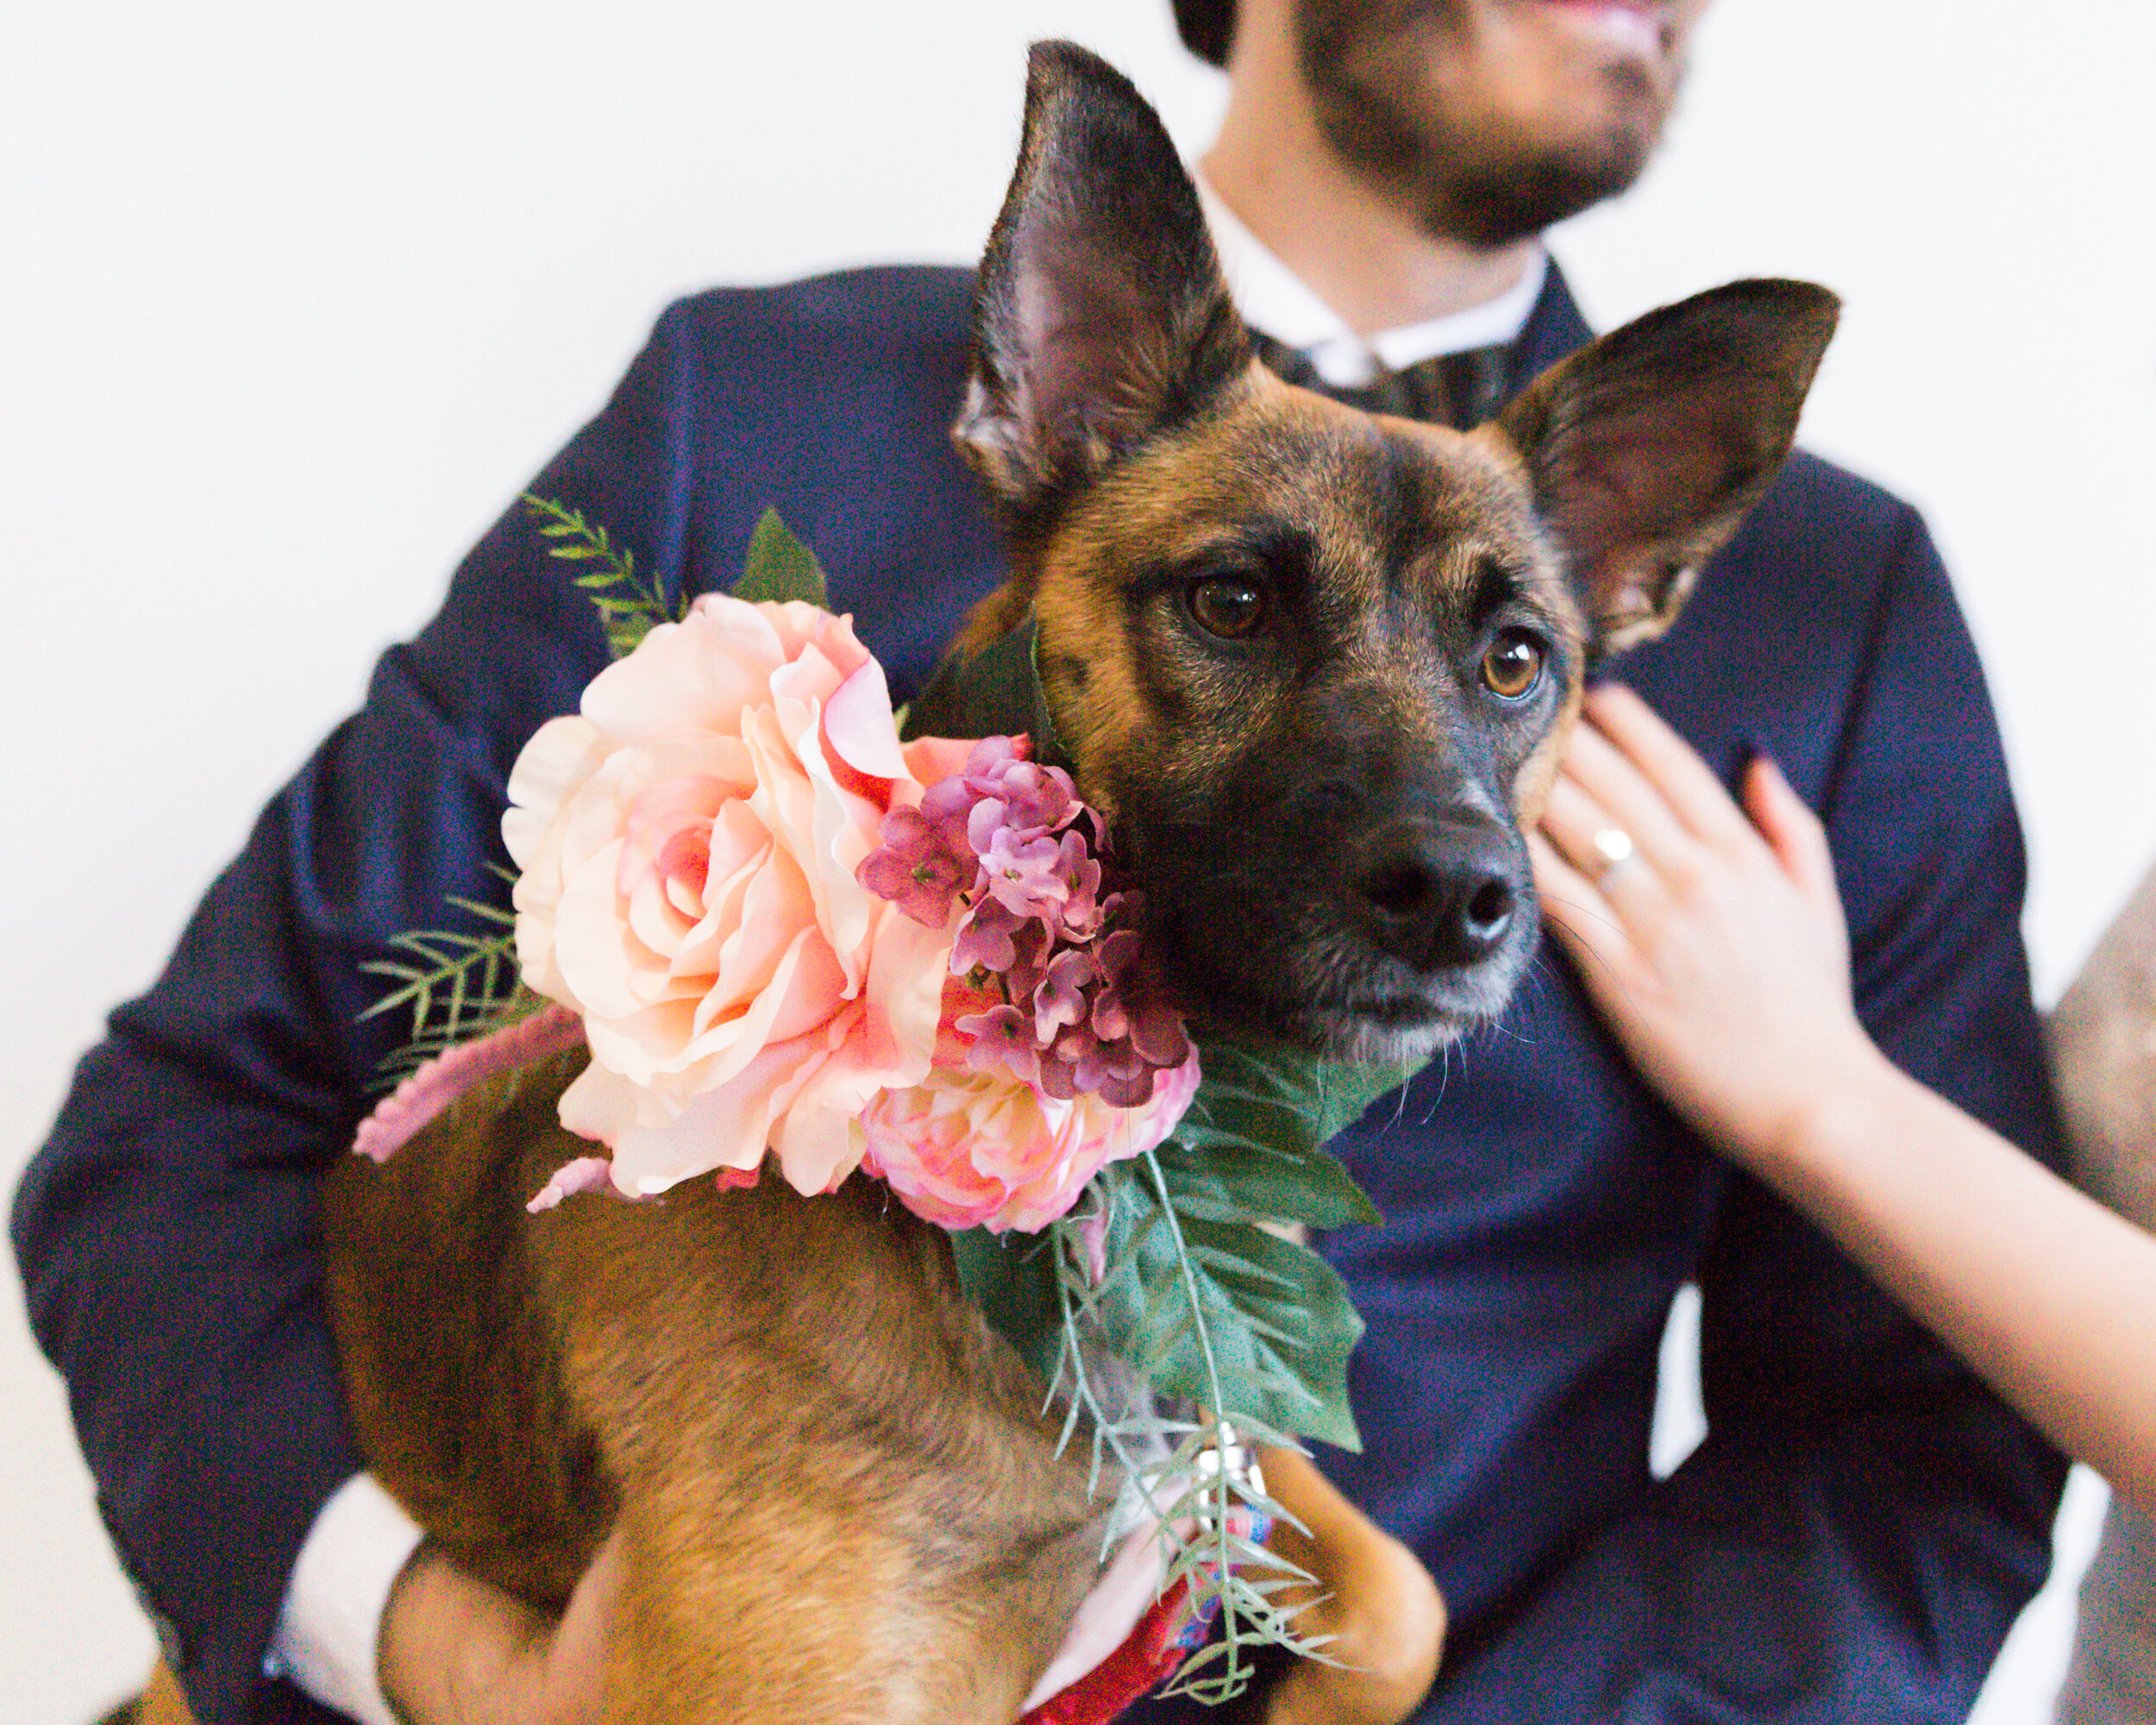 haven street ballroom wedding with puppies best baltimore photographers megapixels media photography-7.jpg